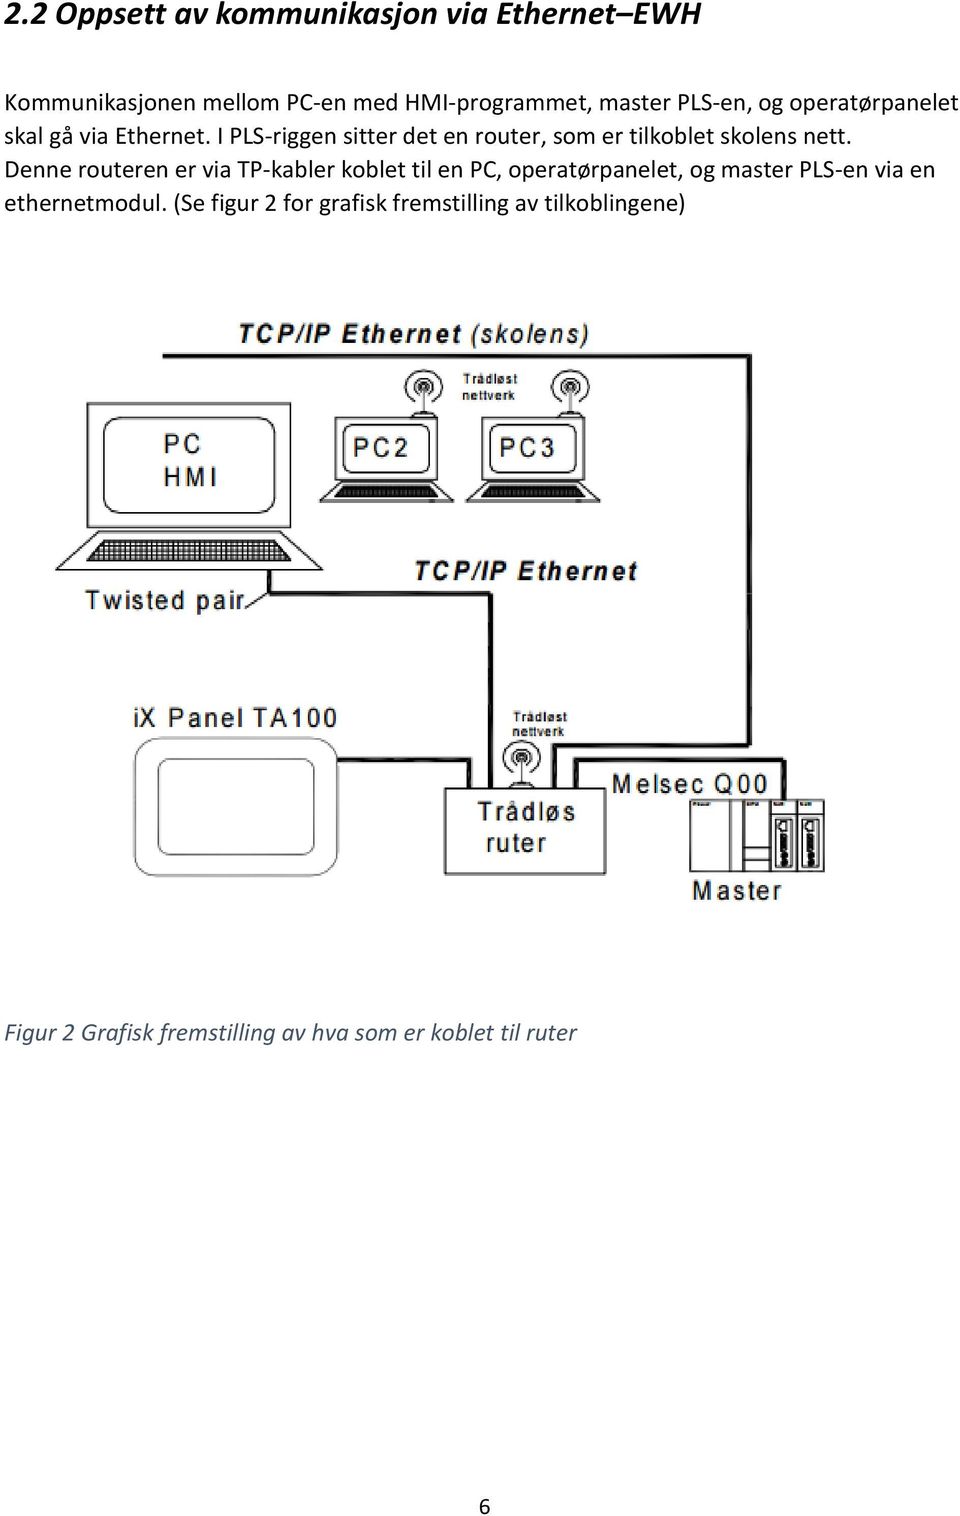 Denne routeren er via TP-kabler koblet til en PC, operatørpanelet, og master PLS-en via en ethernetmodul.